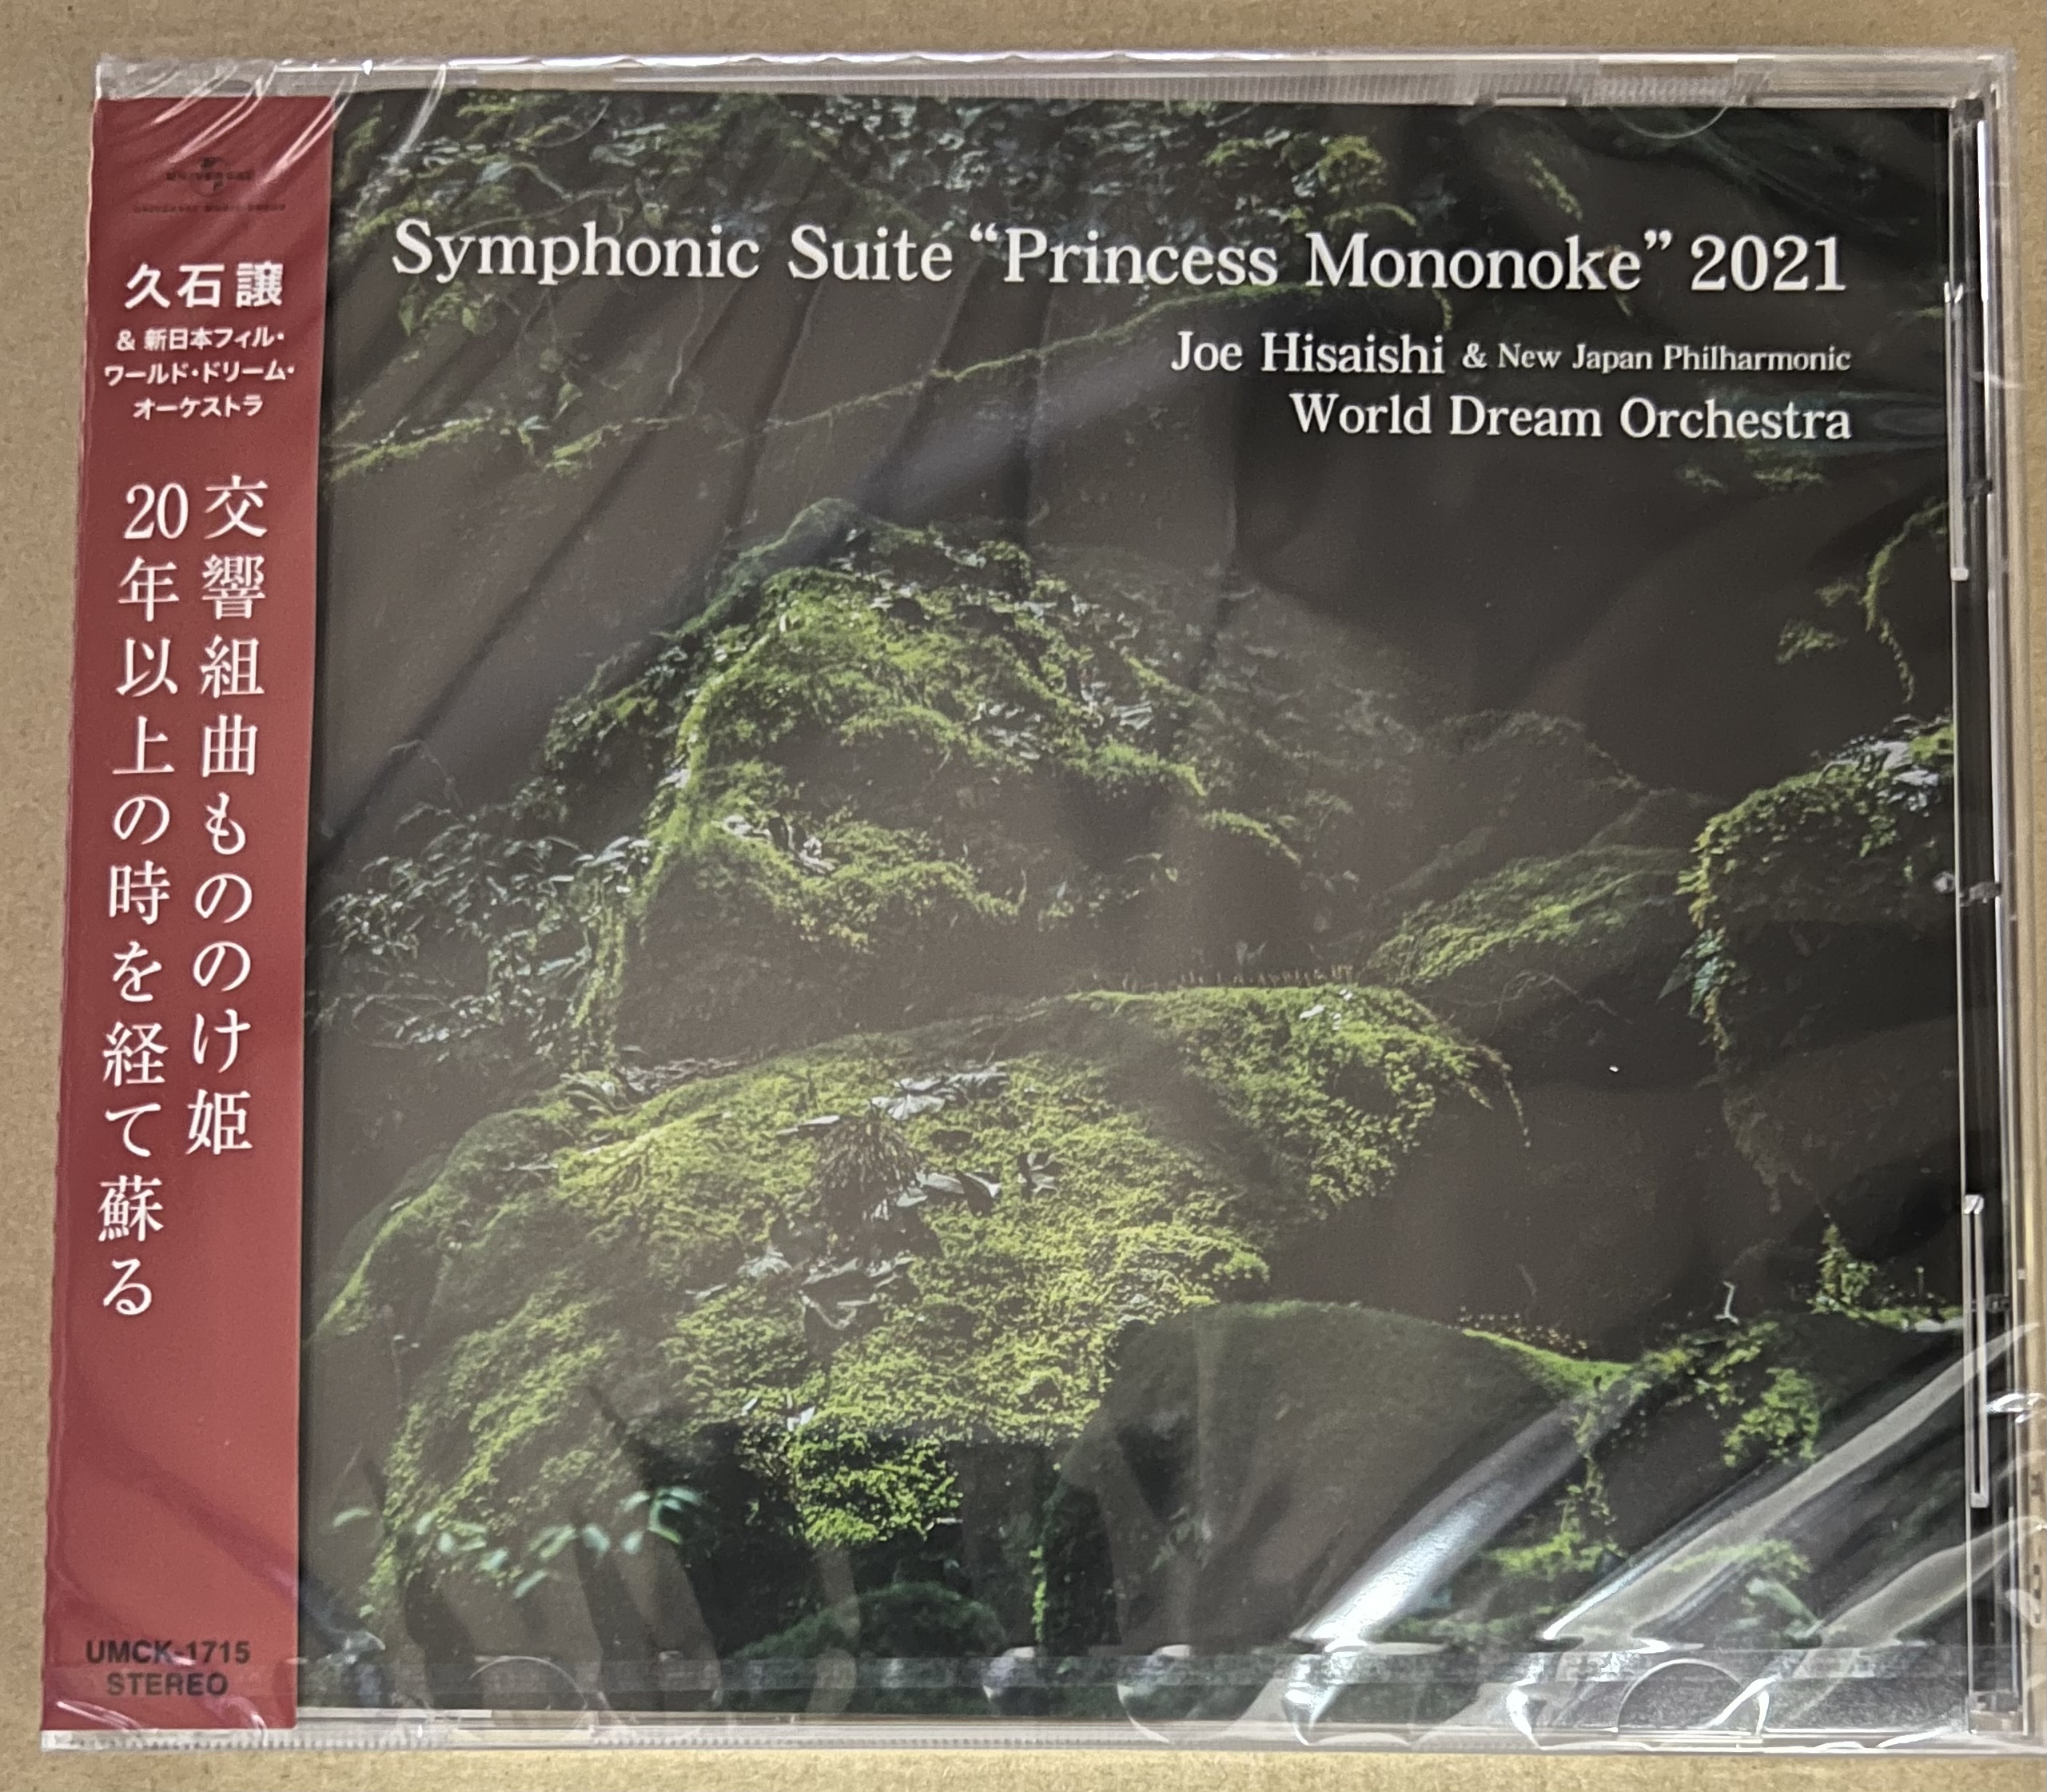 「Symphonic Suite “Princess Mononoke”2021」を聴いて